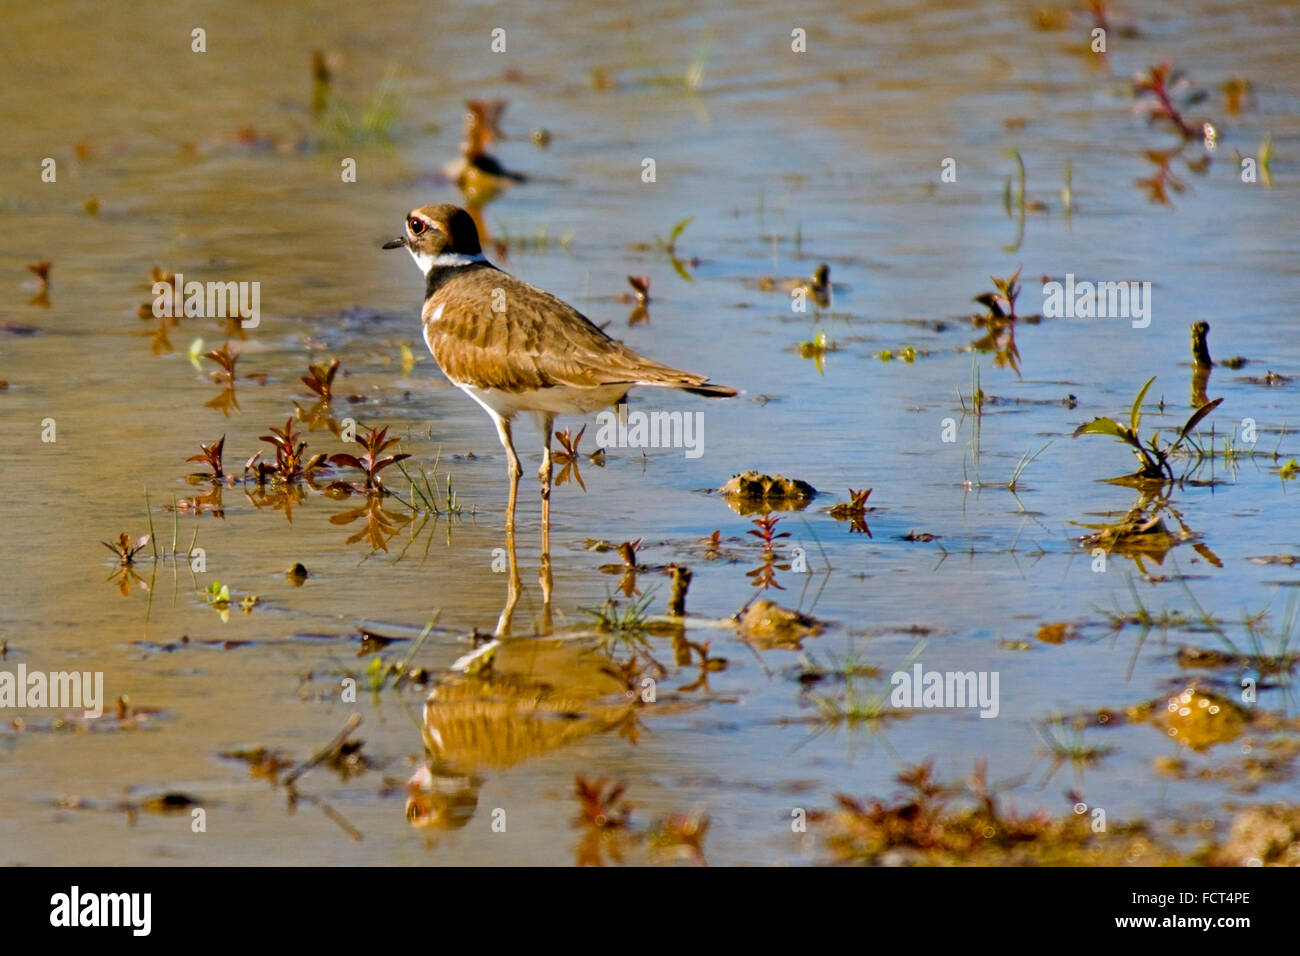 A killdeer sits by a pond in a marshland area. Stock Photo